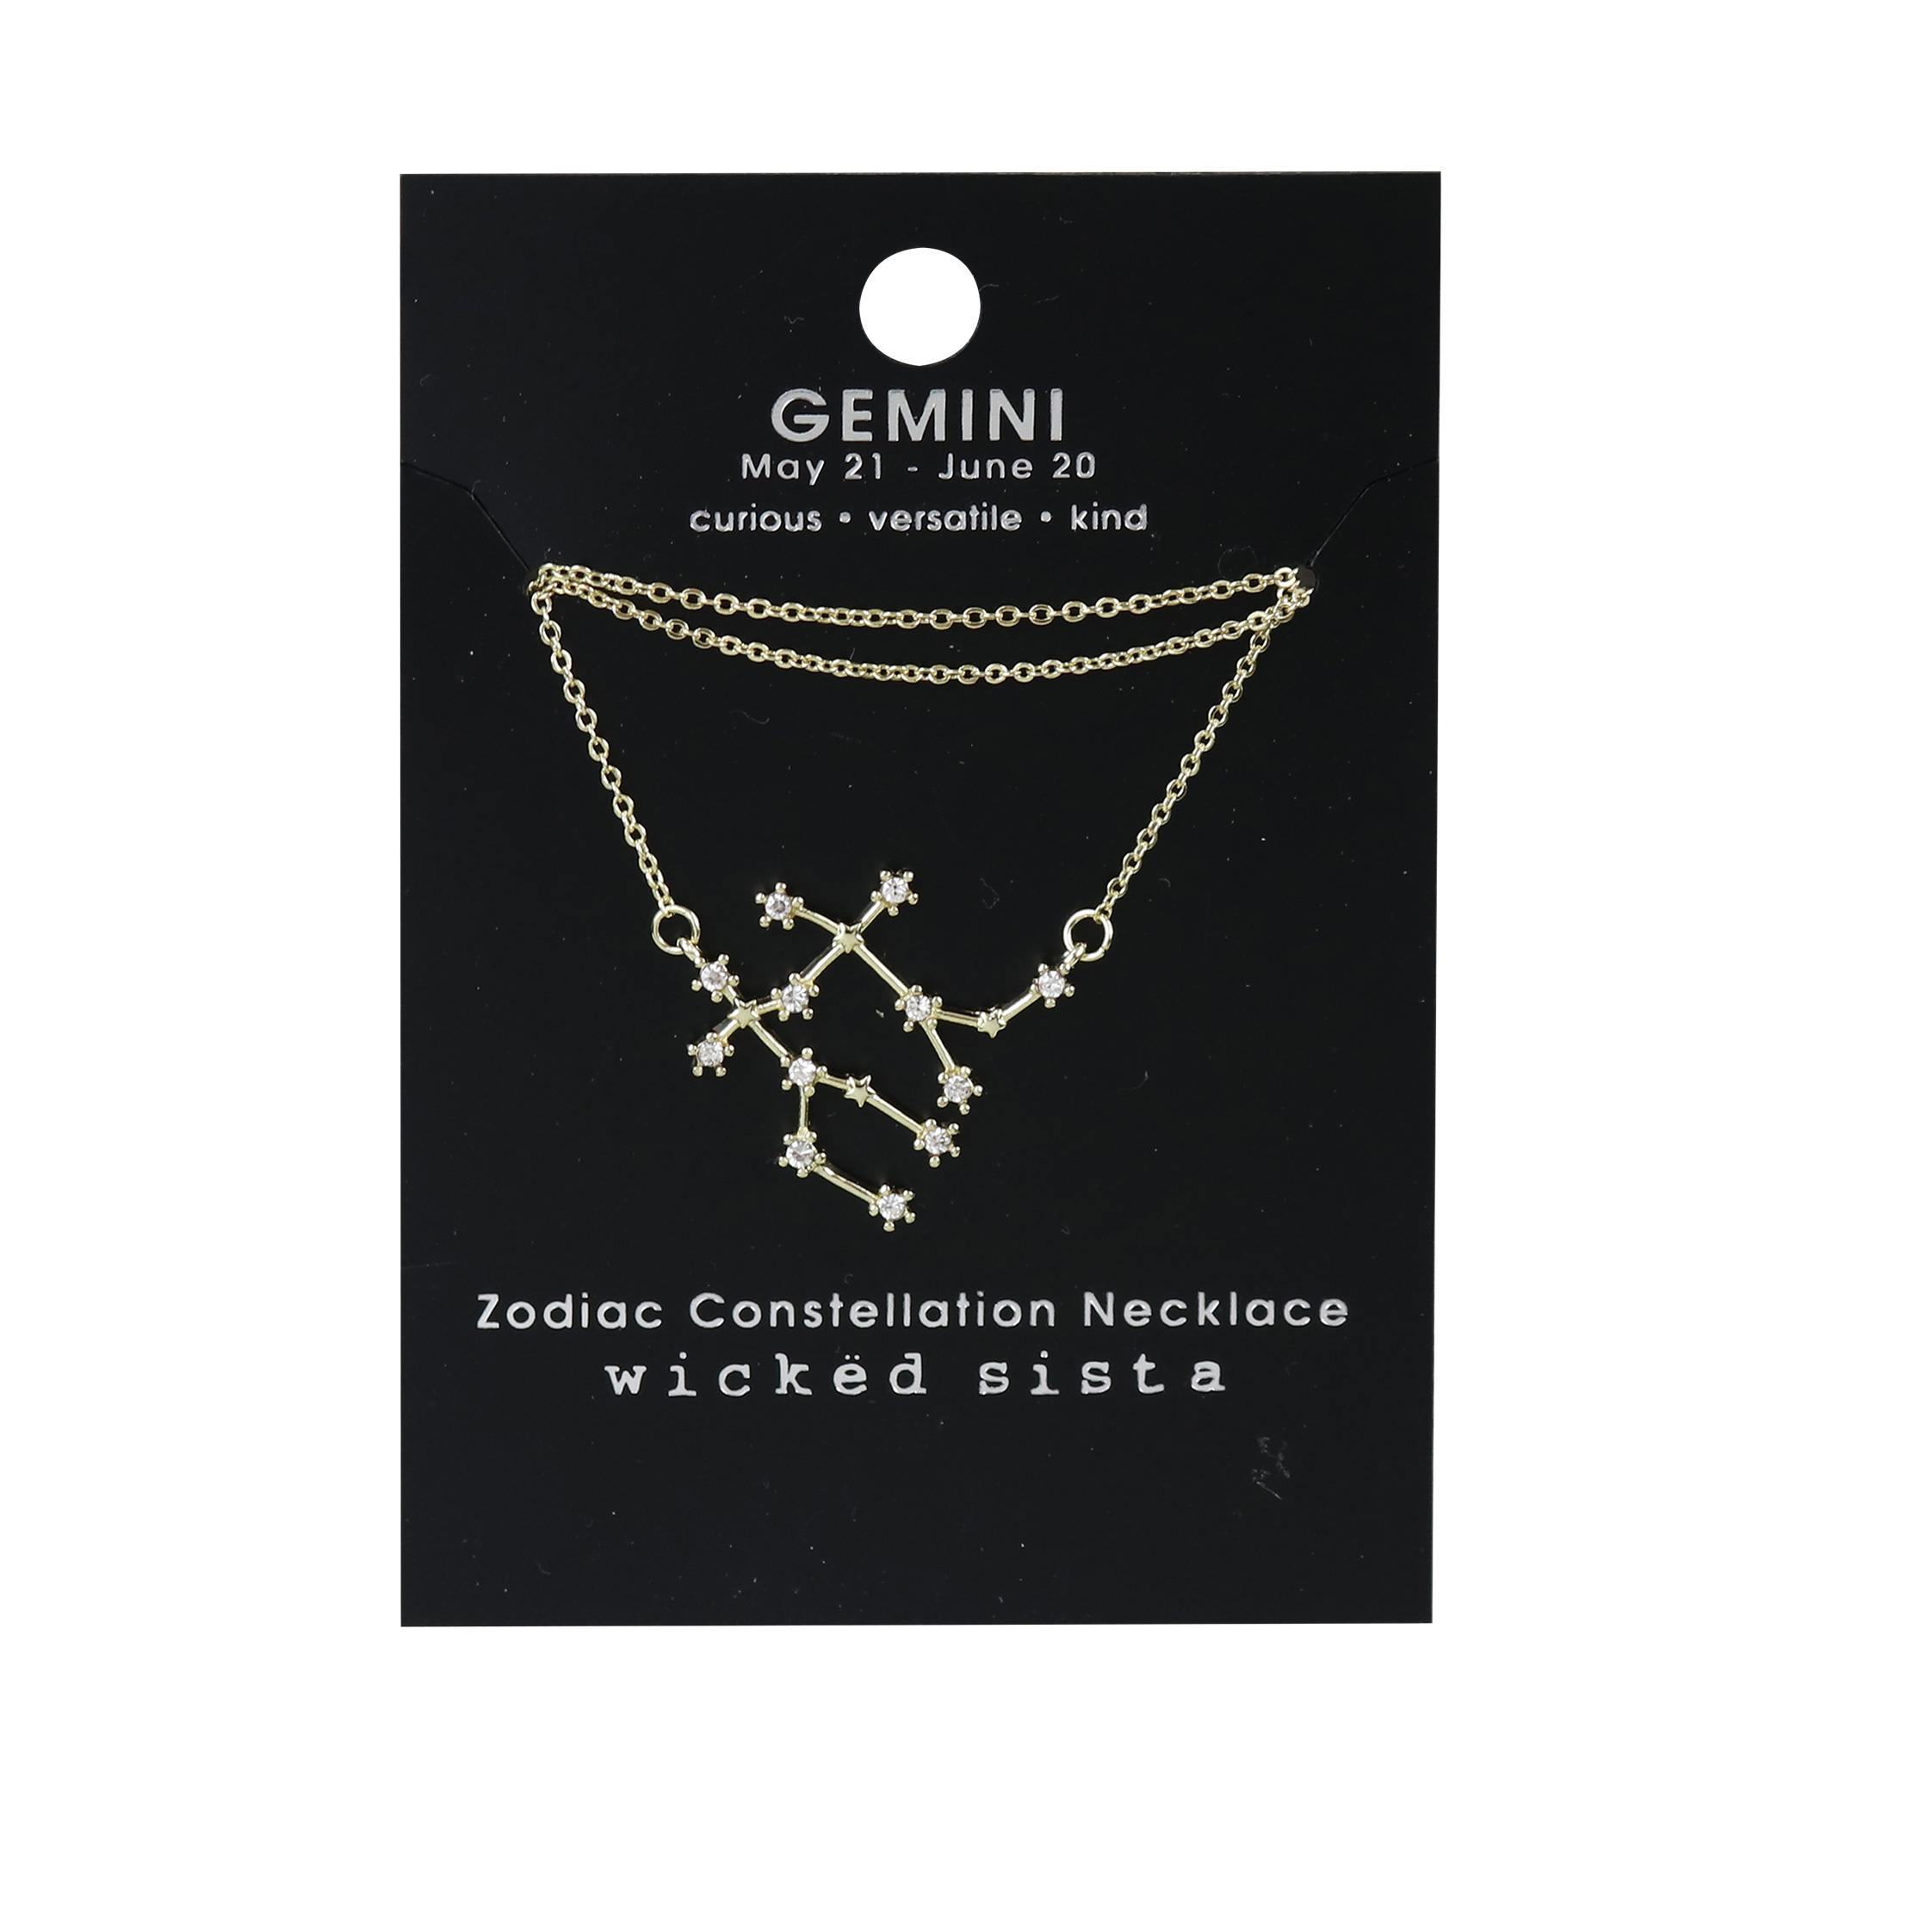 Buy Antiquestreet Necklace Customize Gemini zodiac Pendant Necklace Girl  Women at Amazon.in